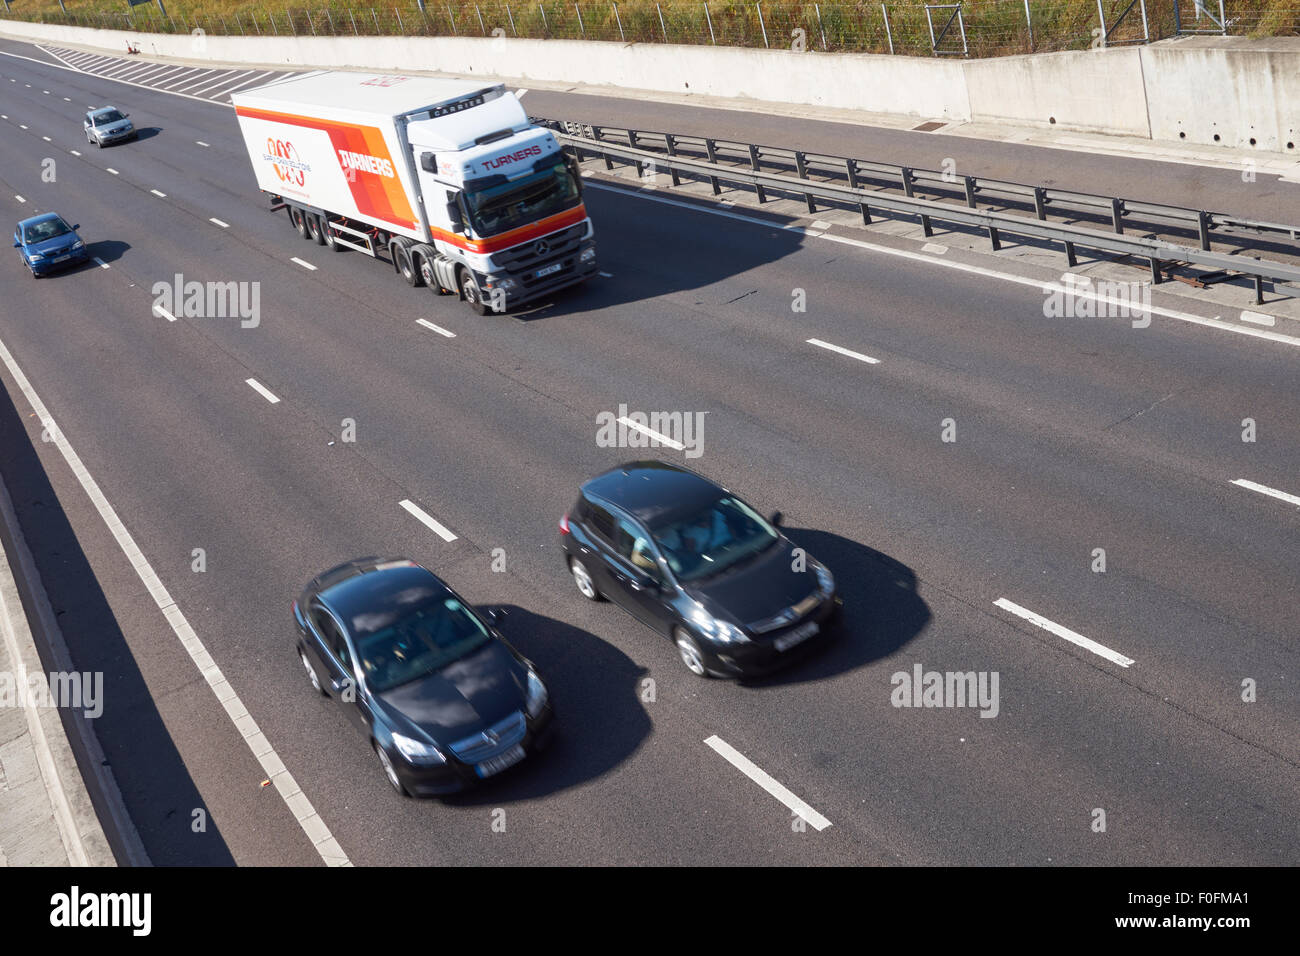 M25 motorway in London Essex England United Kingdom UK Stock Photo